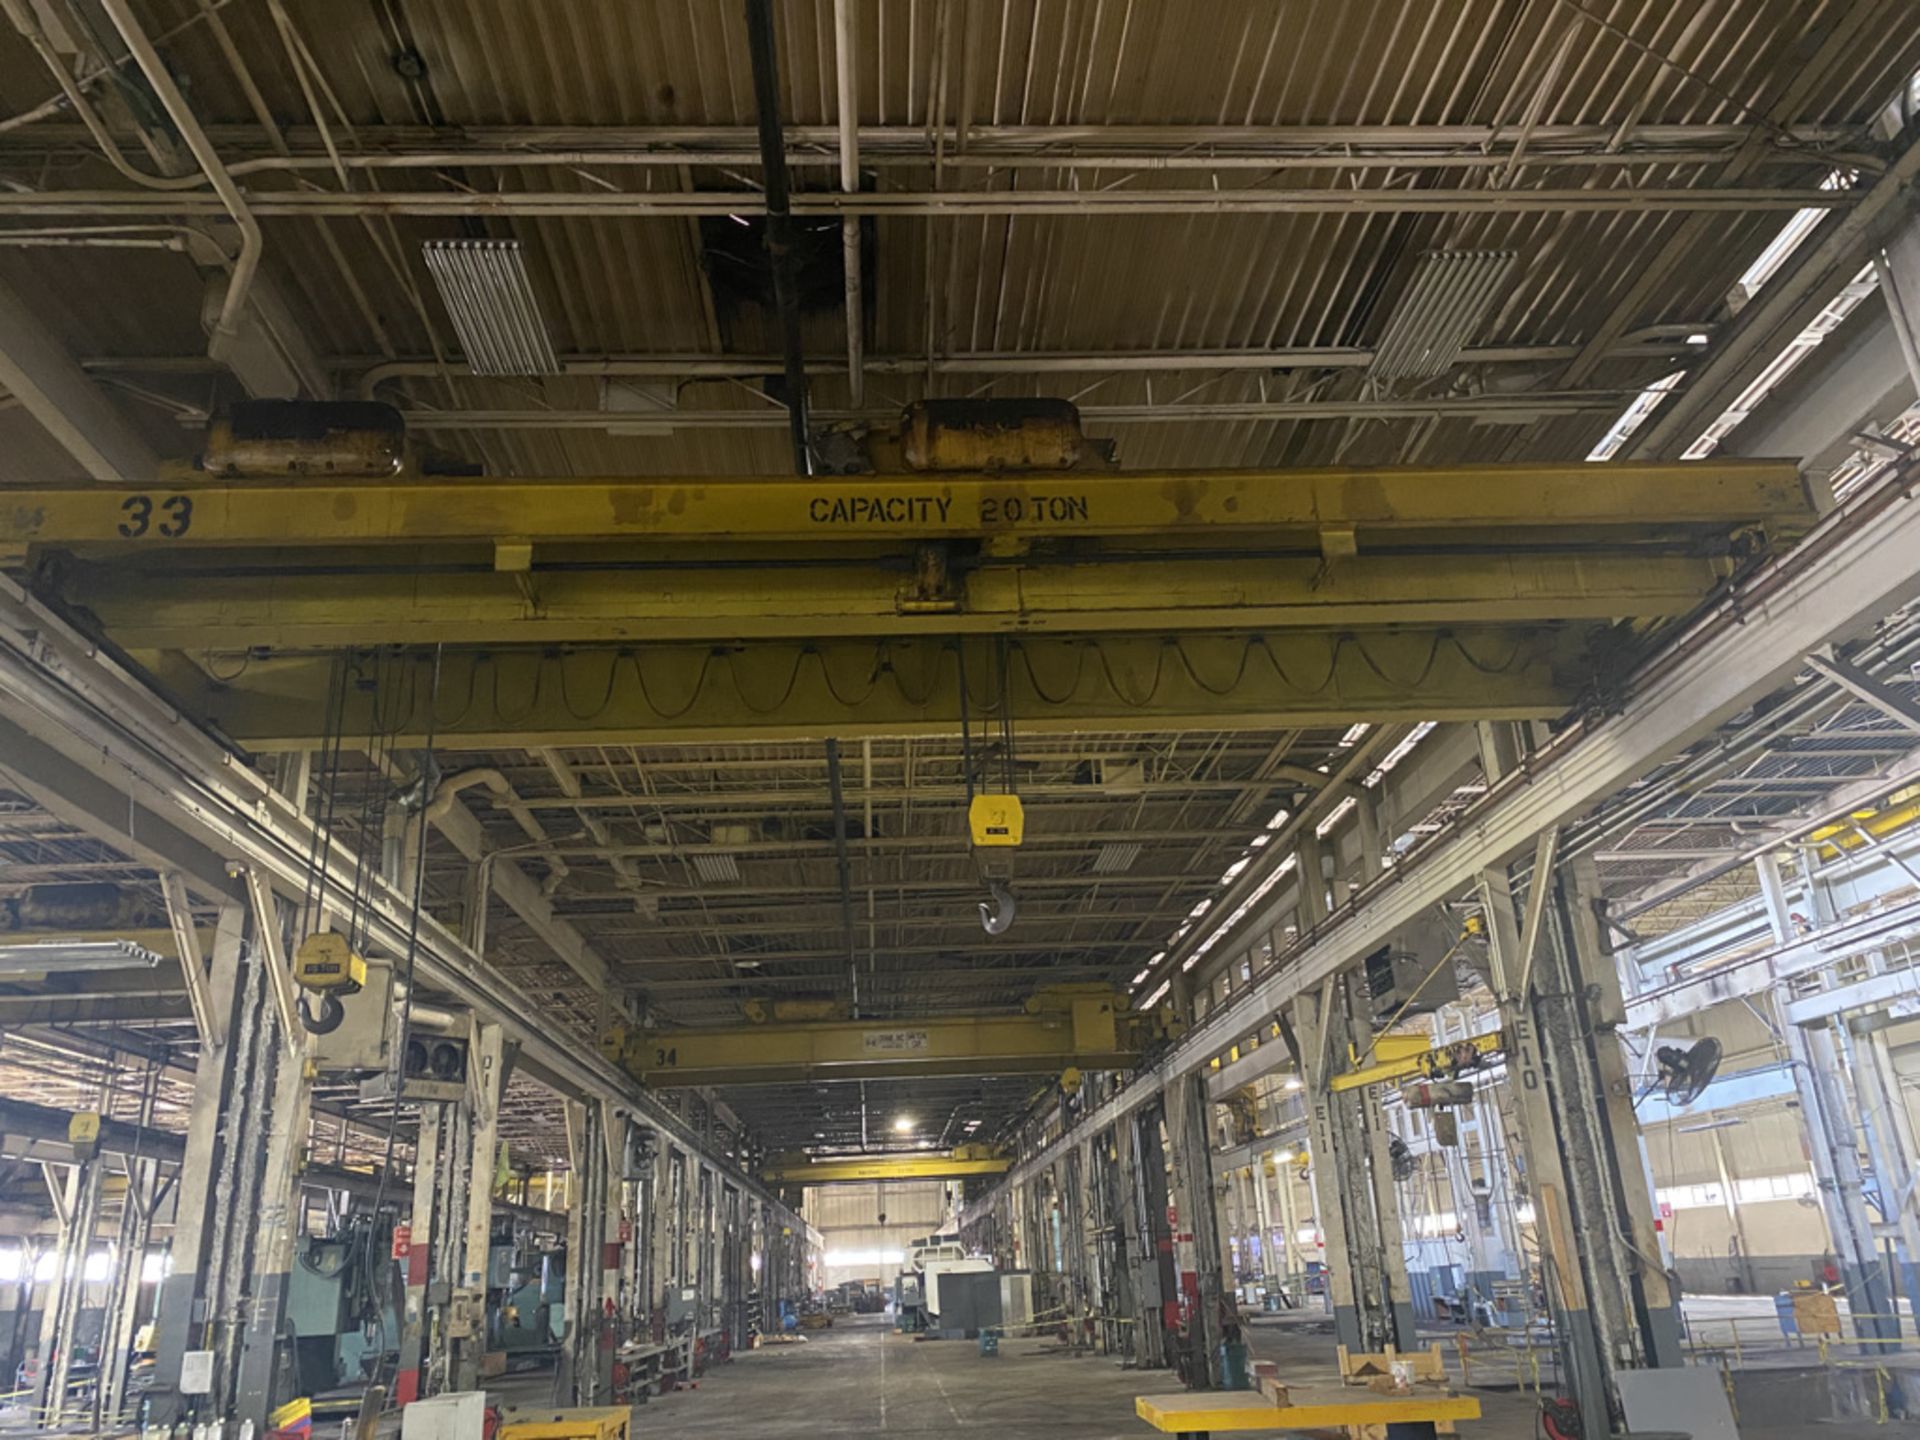 20/15 Robbins & Meyers Overhead double girder crane pendant control,34' span